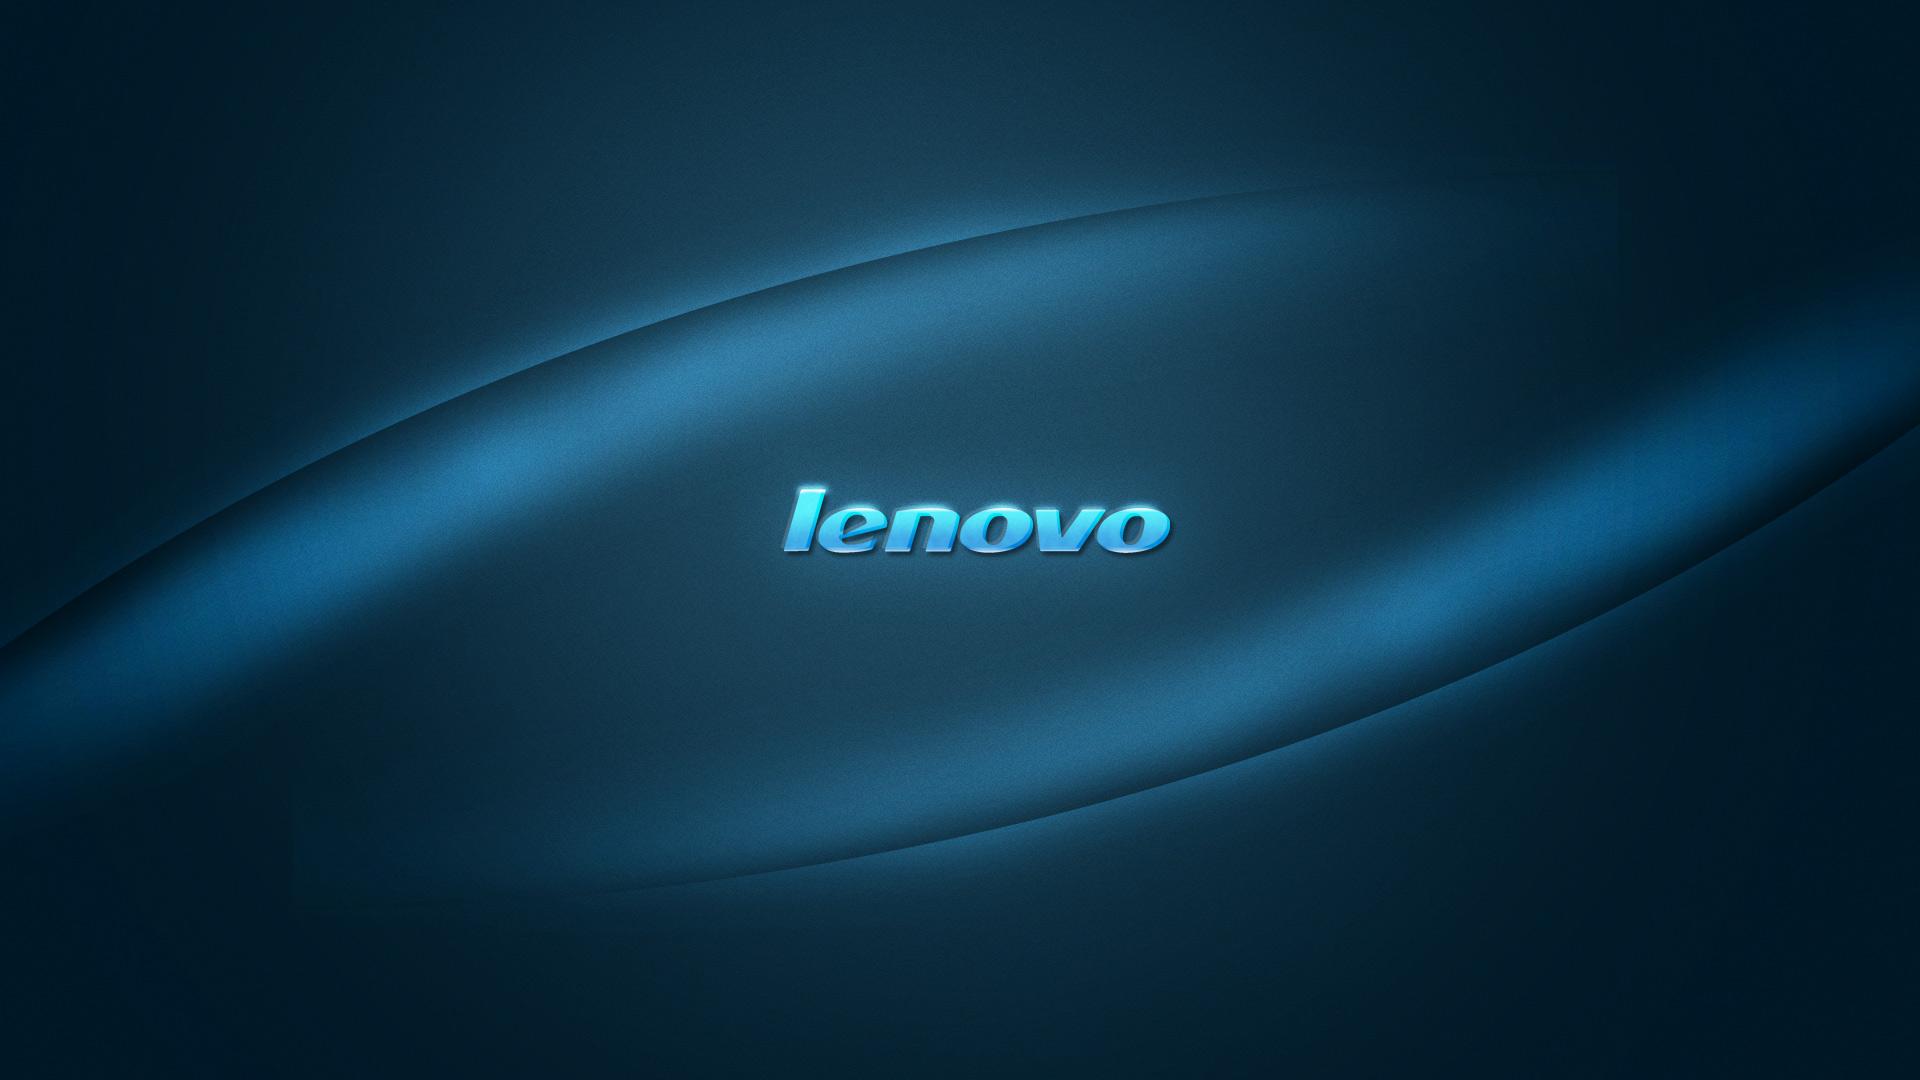 Lenovo IdeaPad Laptop Wallpaper